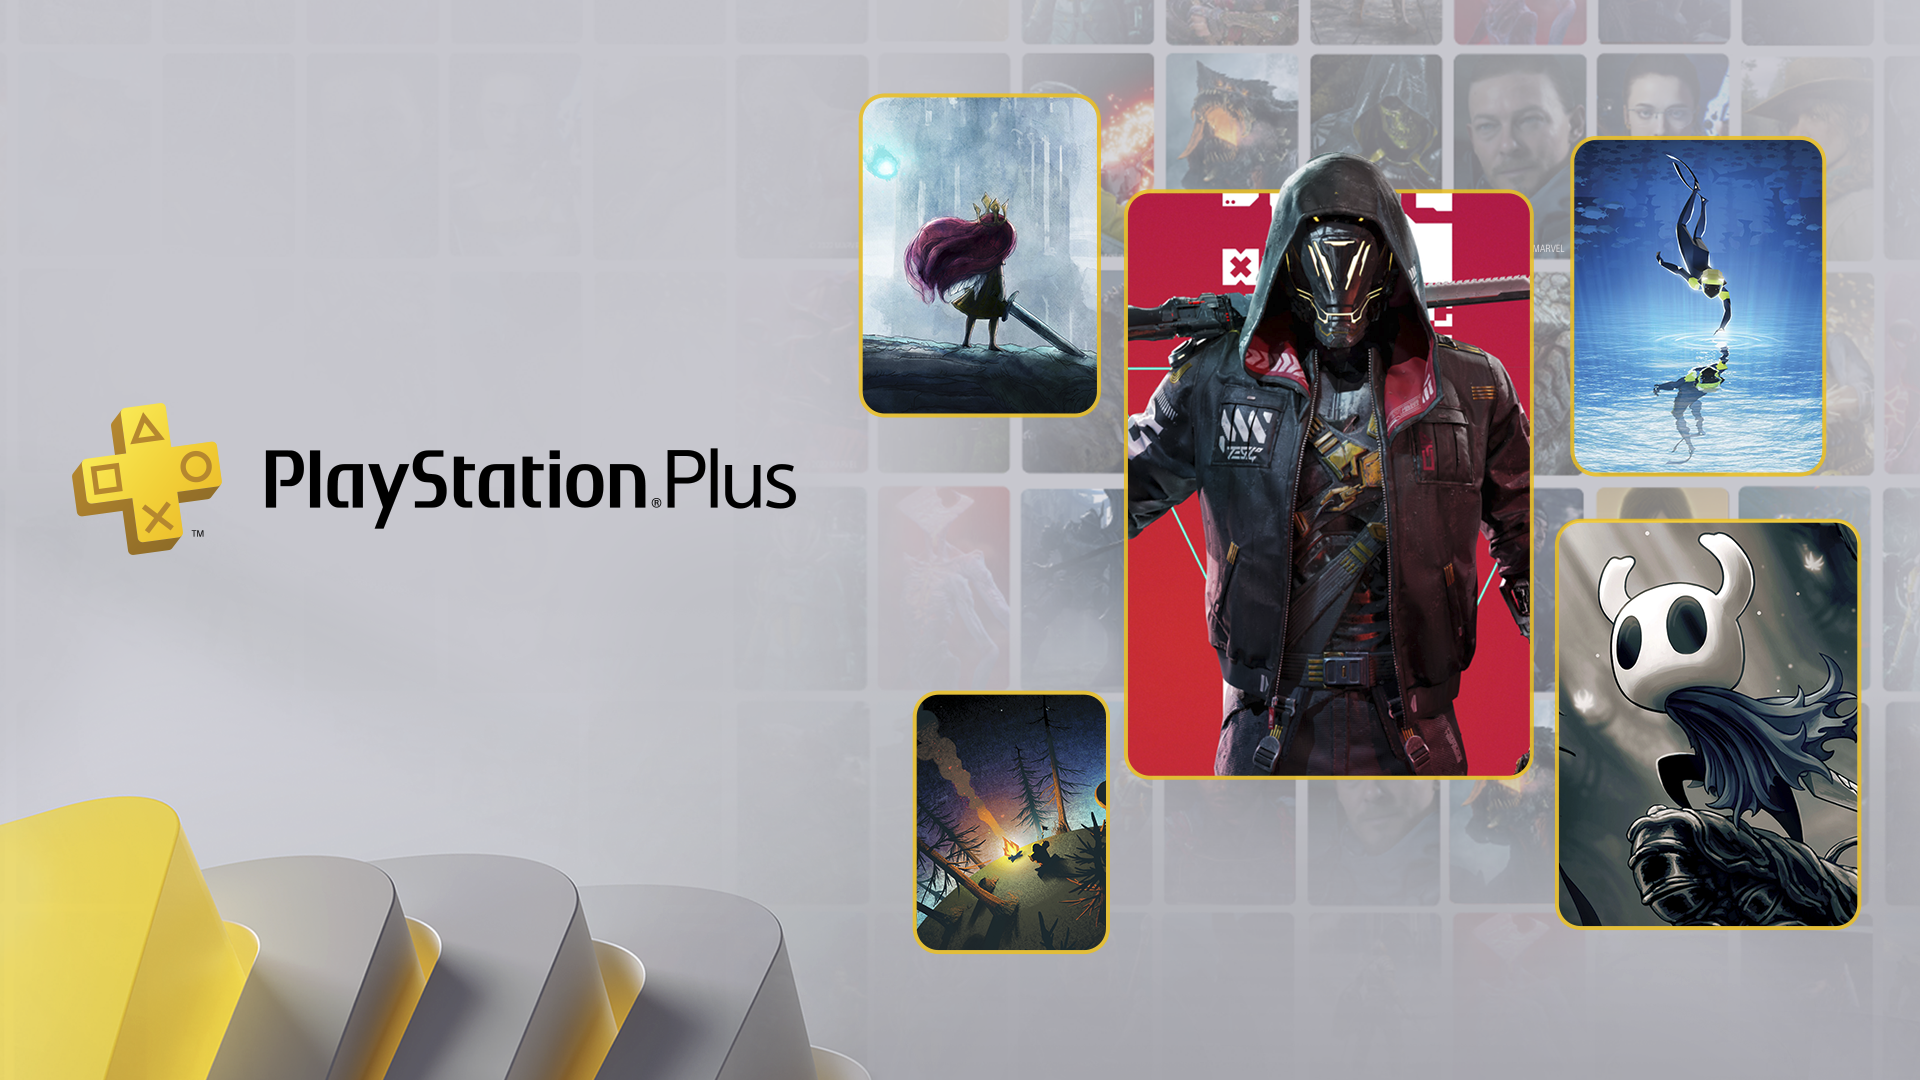 PlayStation Plus升級方案隱藏佳作宣傳美術設計，展示《Dead Cells》、《Outer Wilds》、《Ghostrunner》、《Celeste》和《Hollow Knight》的主要美術設計。